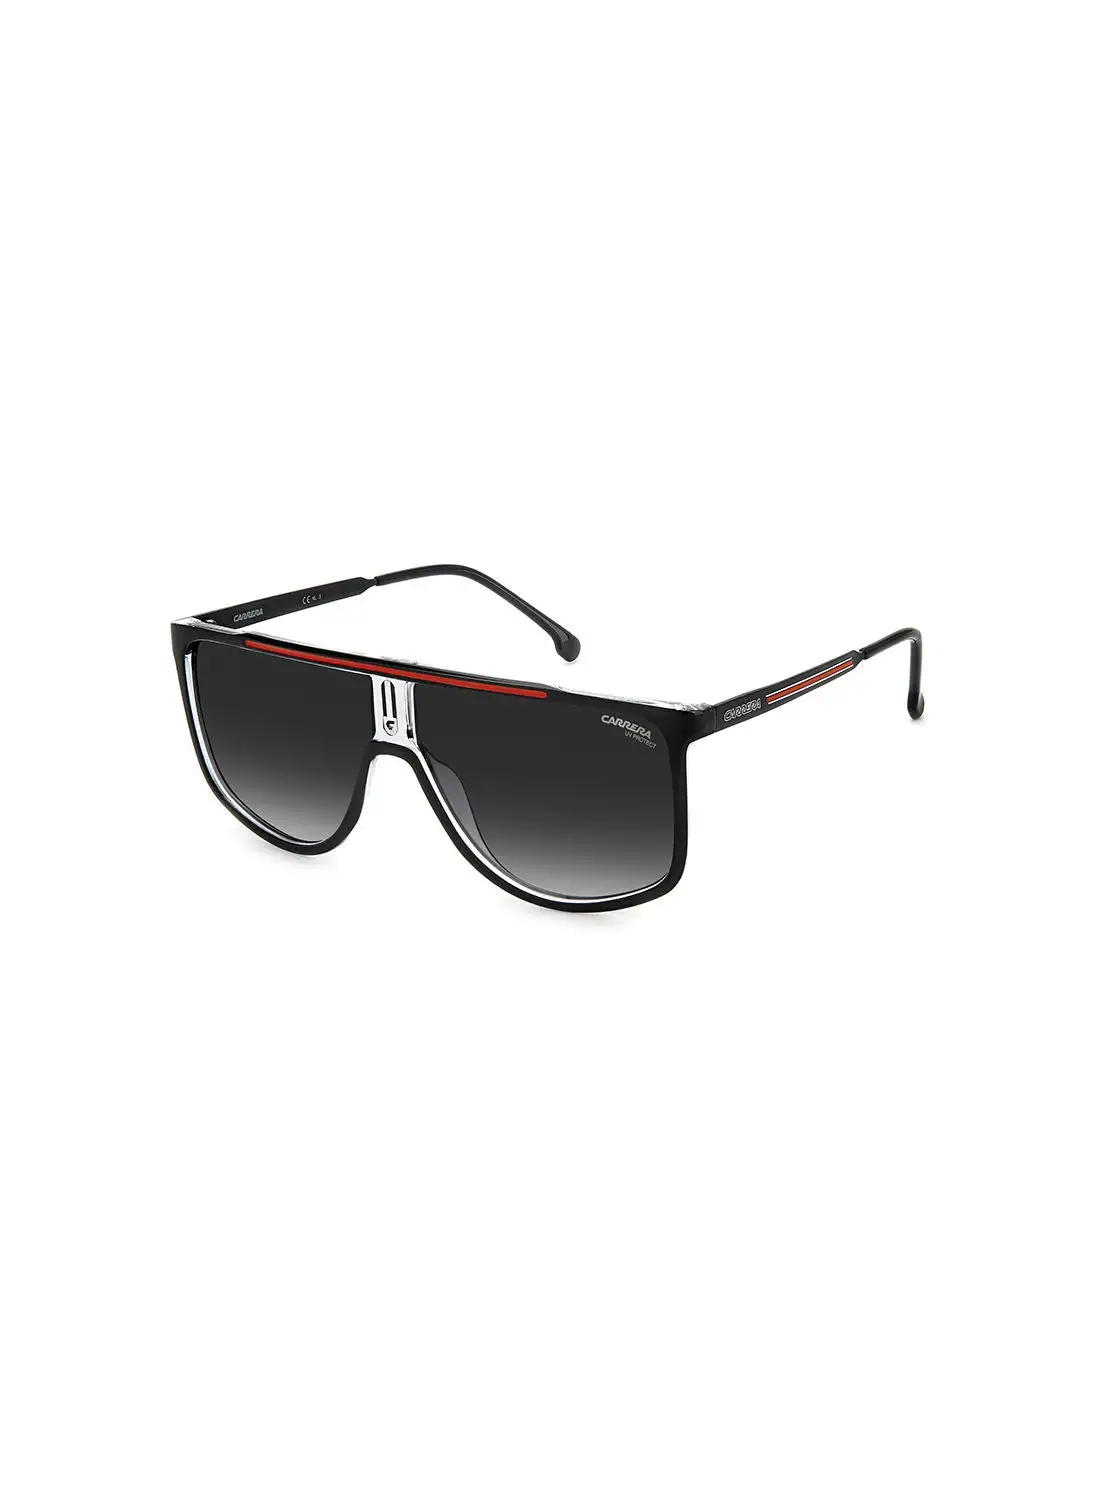 Carrera Men's UV Protection Navigator Sunglasses - Carrera 1056/S Black/Red 61 - Lens Size: 61 Mm